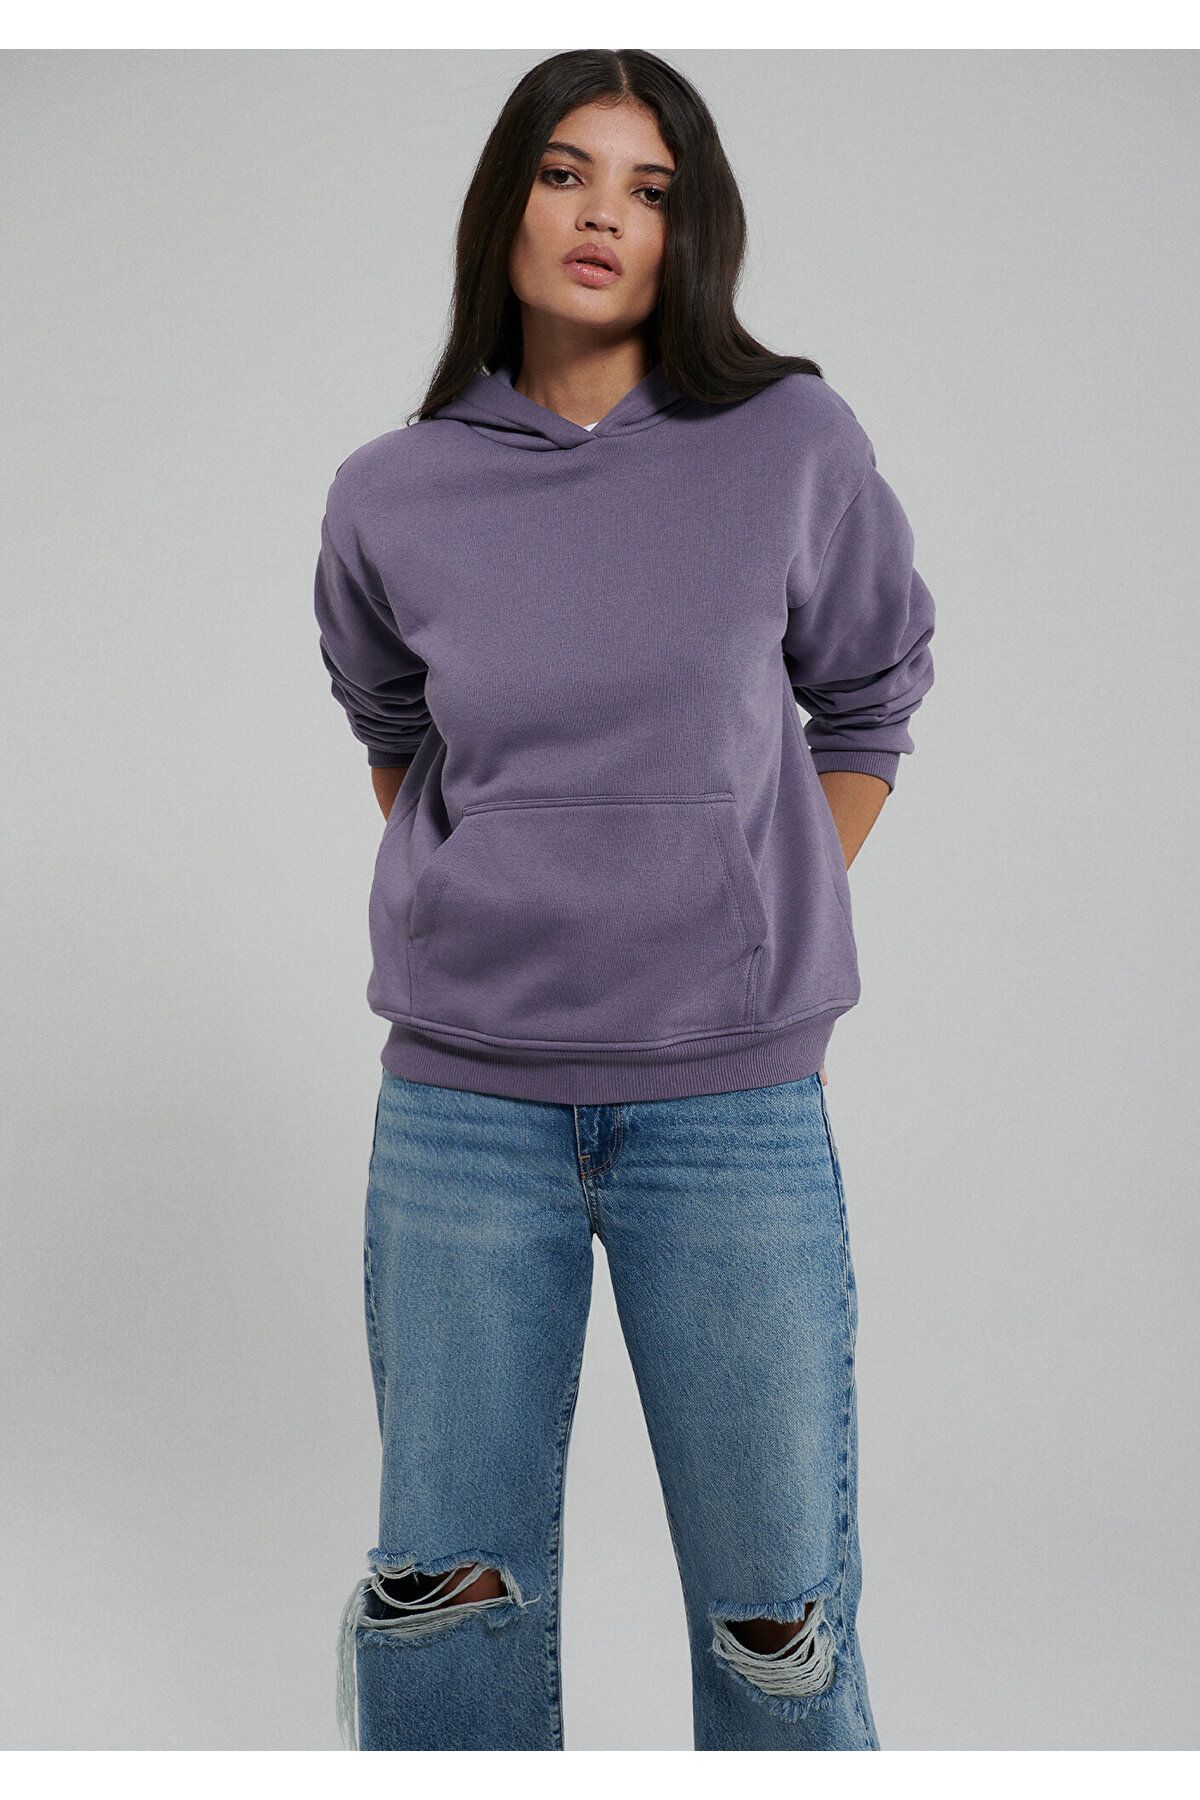 Mavi Mor Basic Sweatshirt 167299-70608